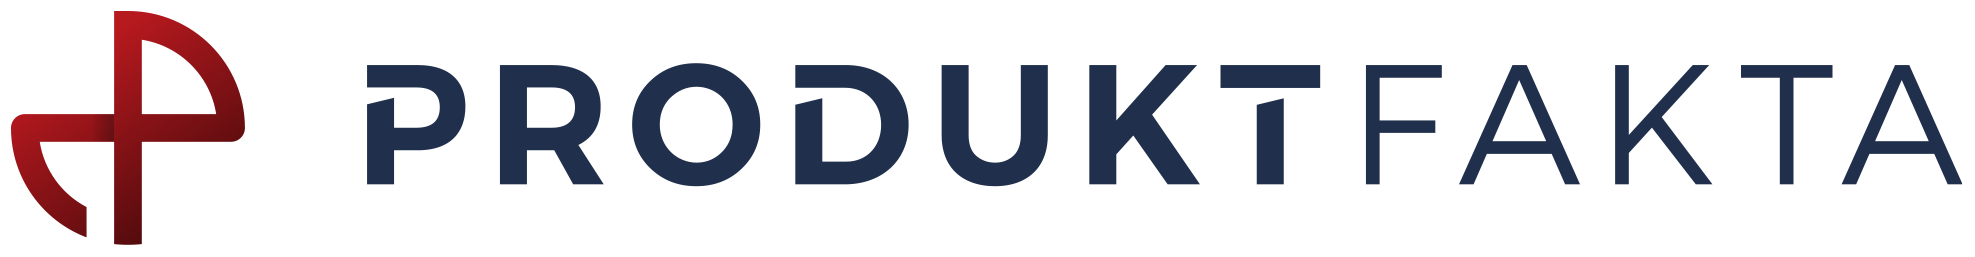 Produktfakta logo - RGB large